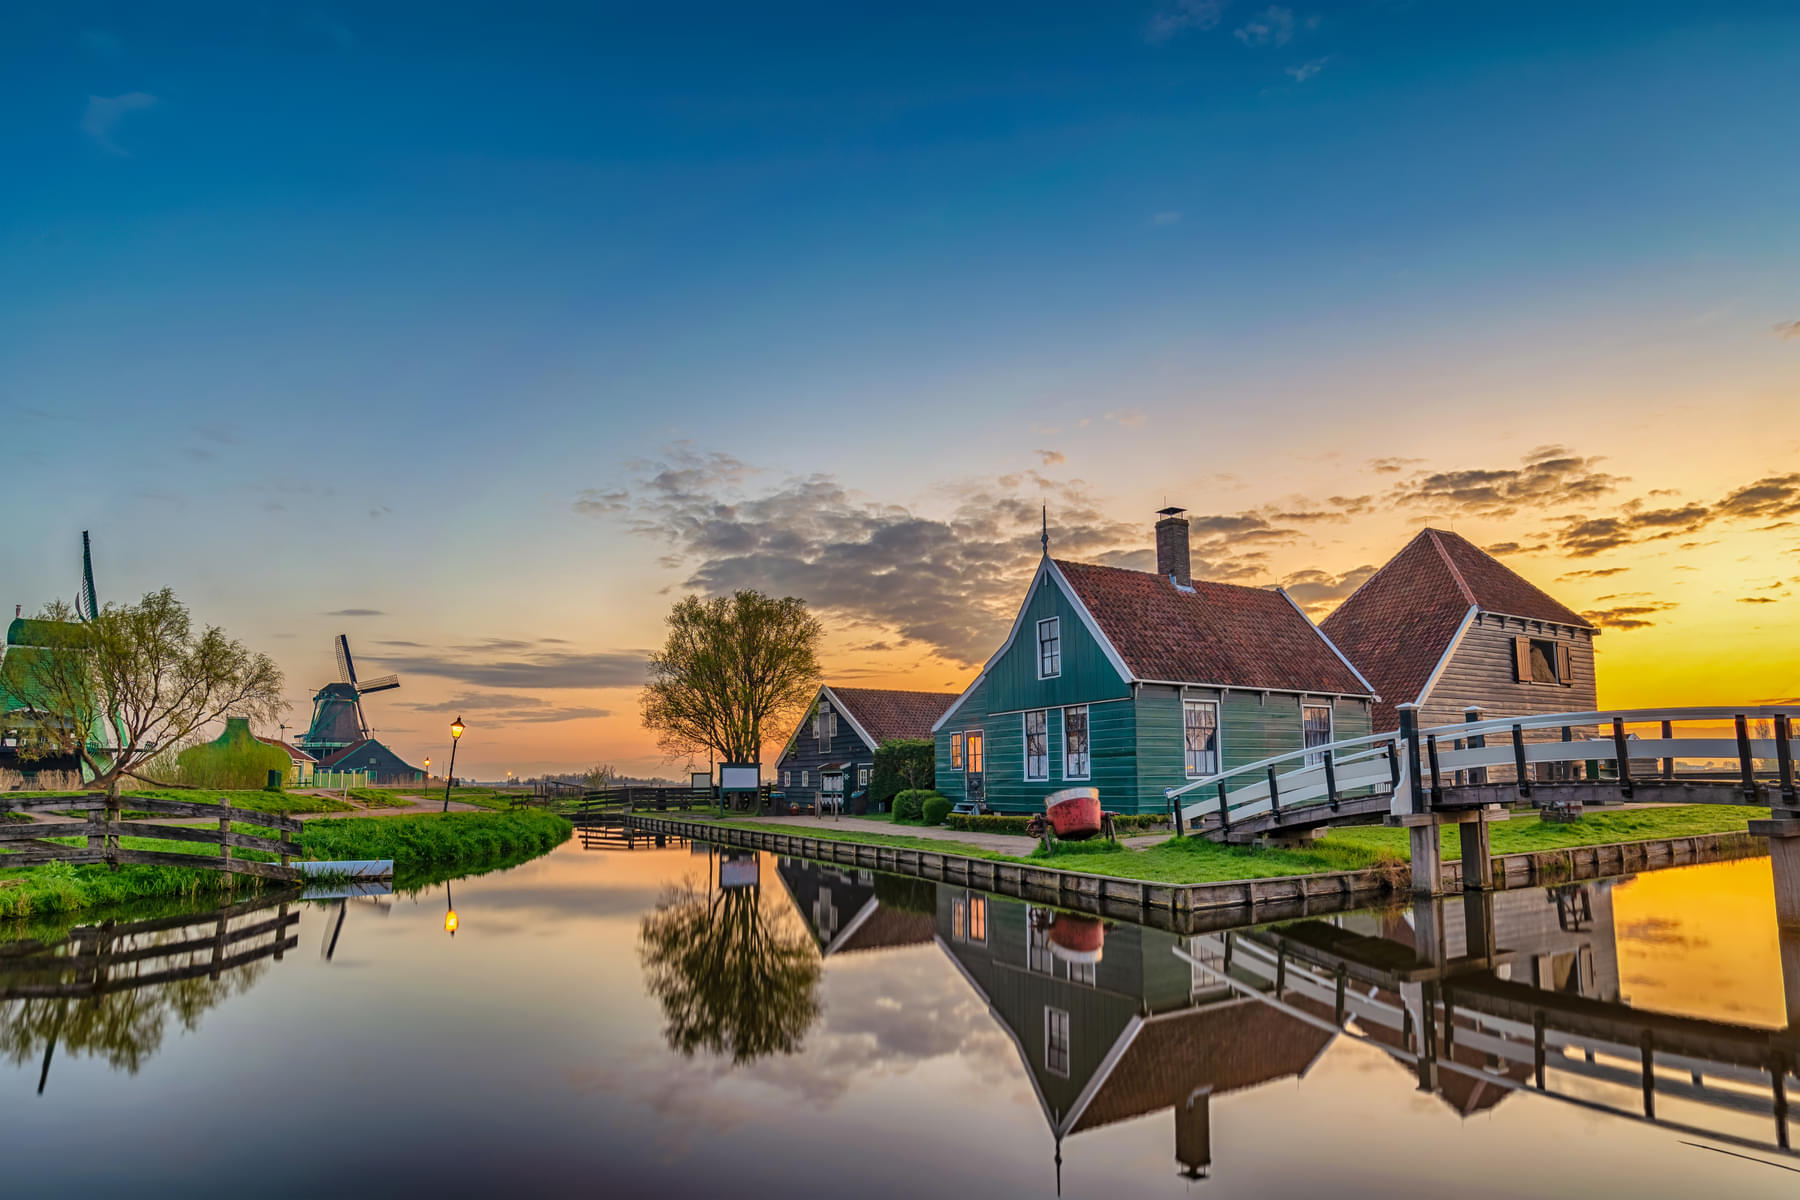 Witness the scenic beauty of Zaanse Schans village